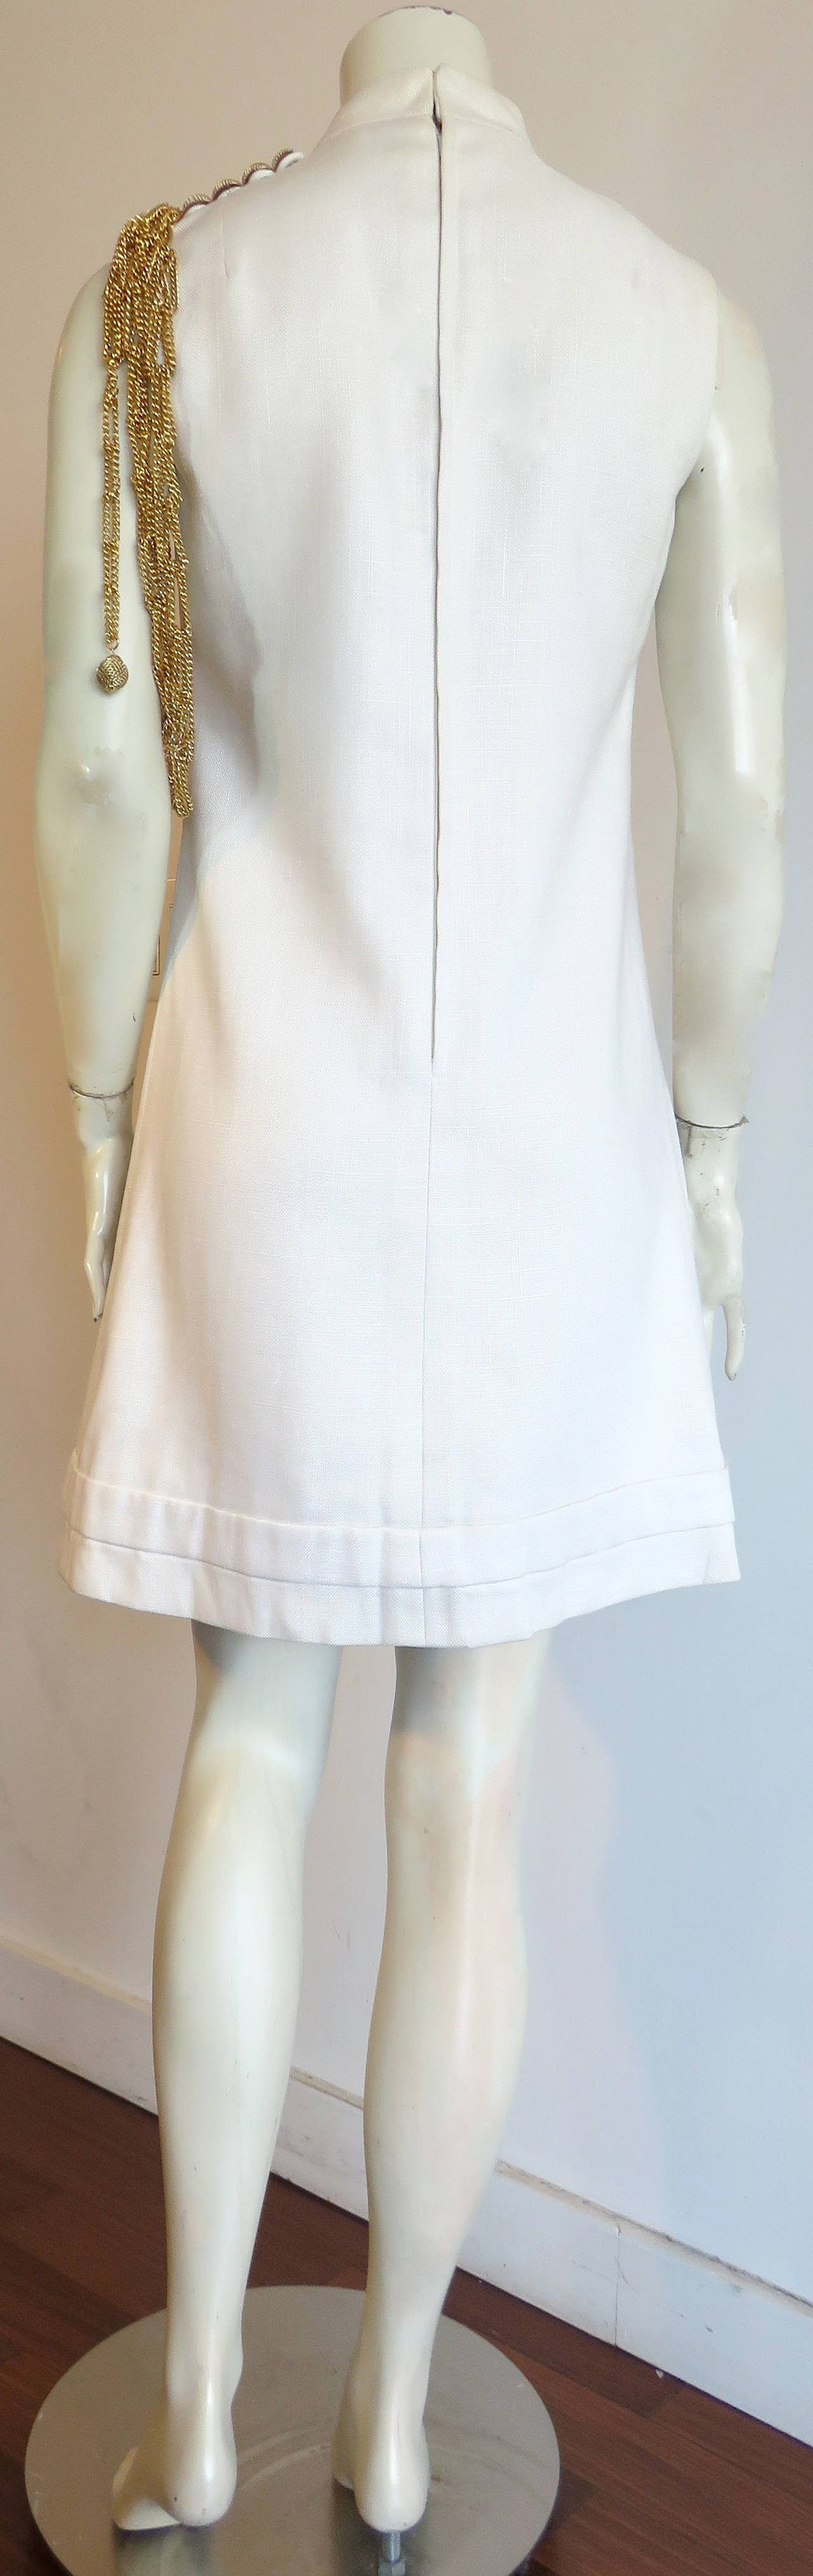 1960's BILL BLASS For MAURICE RENTNER Chain detail dress For Sale 3